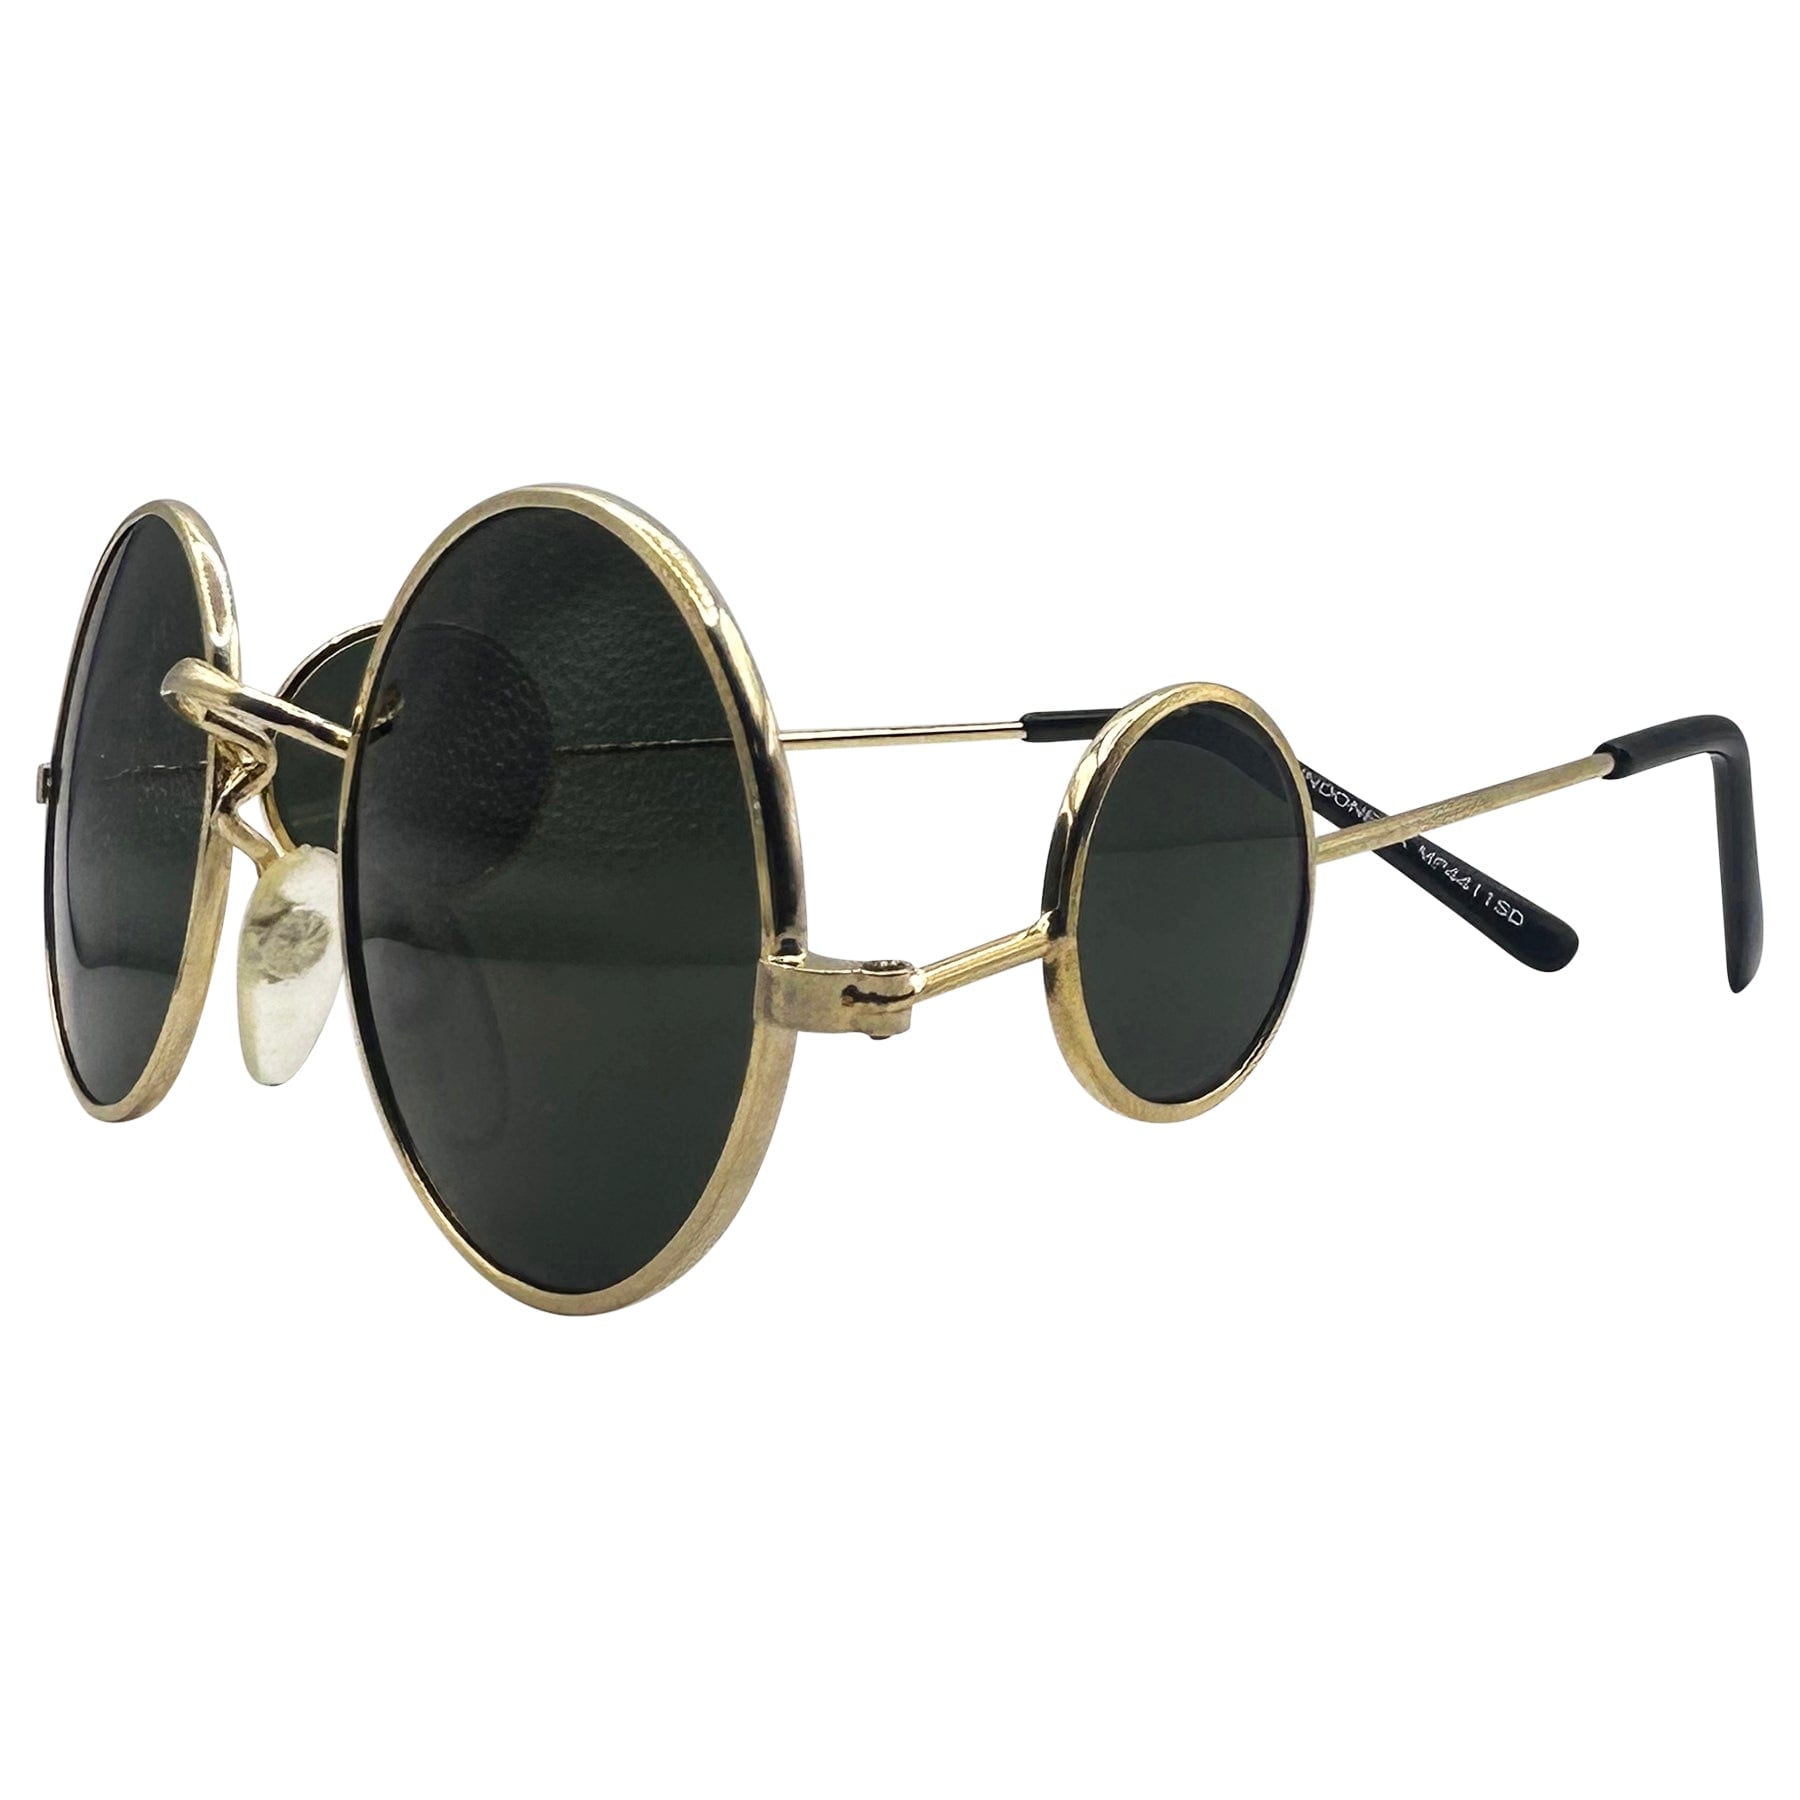 crazy round sunglasses with a unique temple glass lens detailing